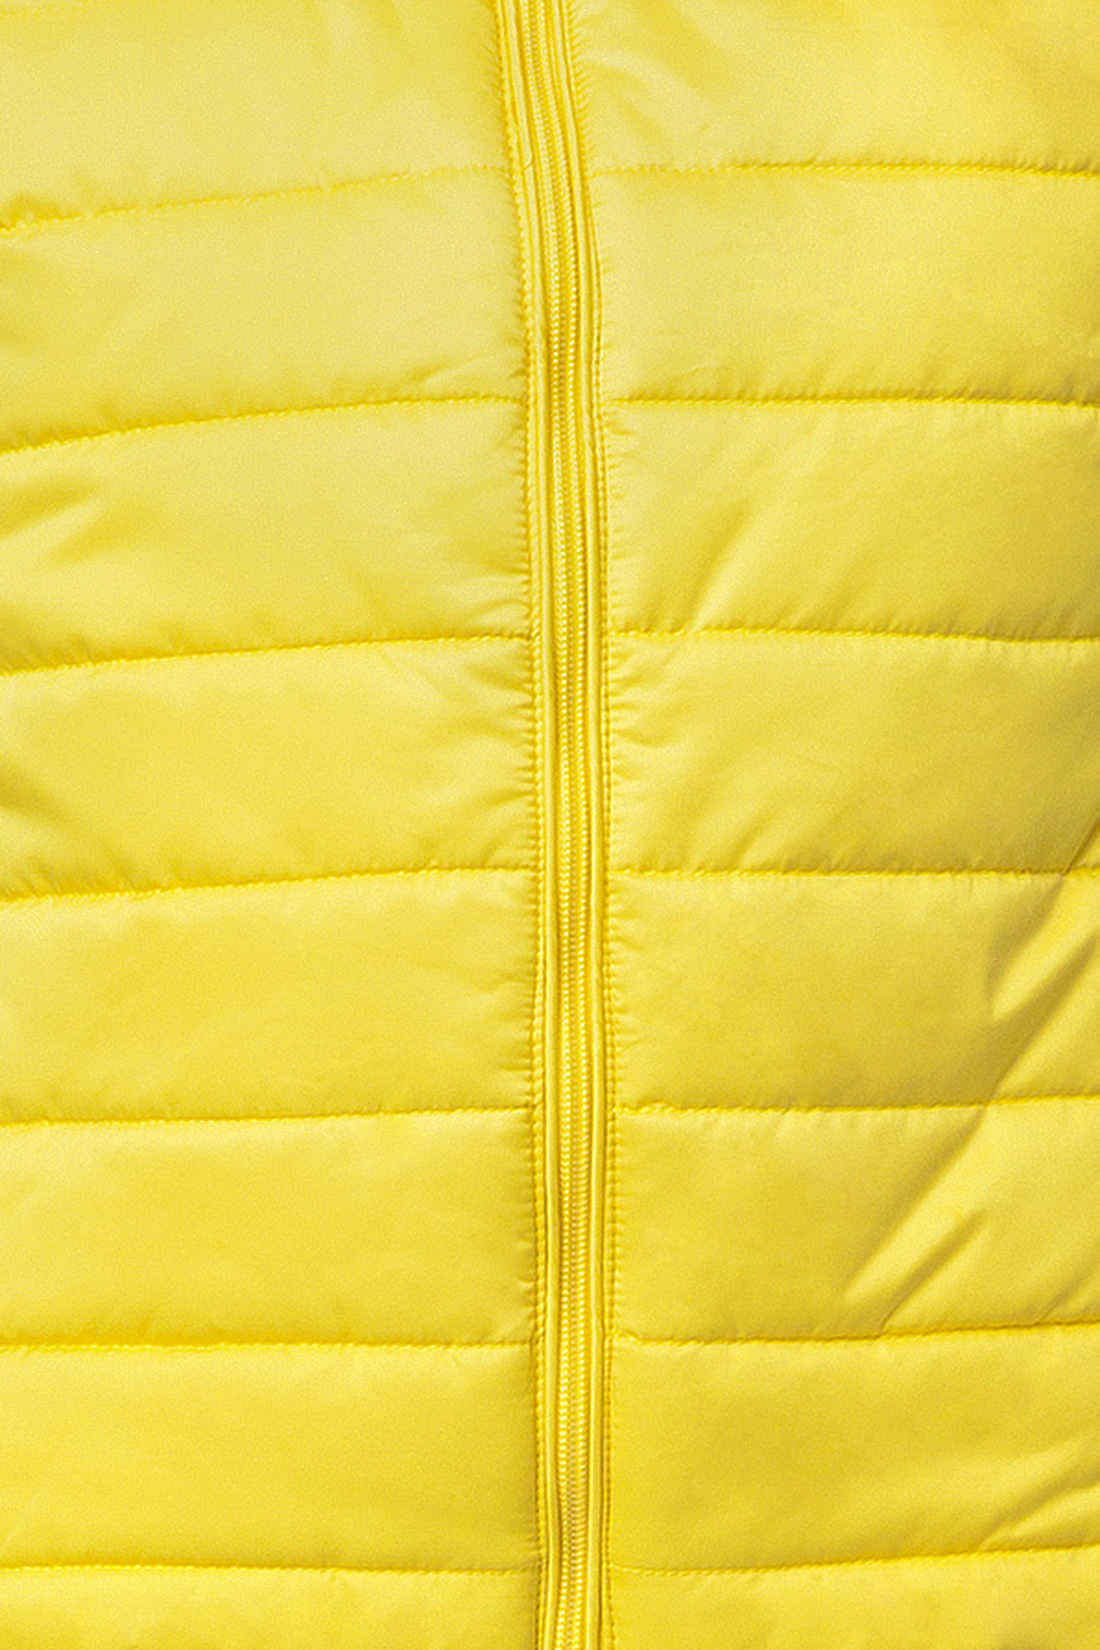 Куртка в спортивном стиле (арт. baon B037007), размер S, цвет желтый Куртка в спортивном стиле (арт. baon B037007) - фото 3